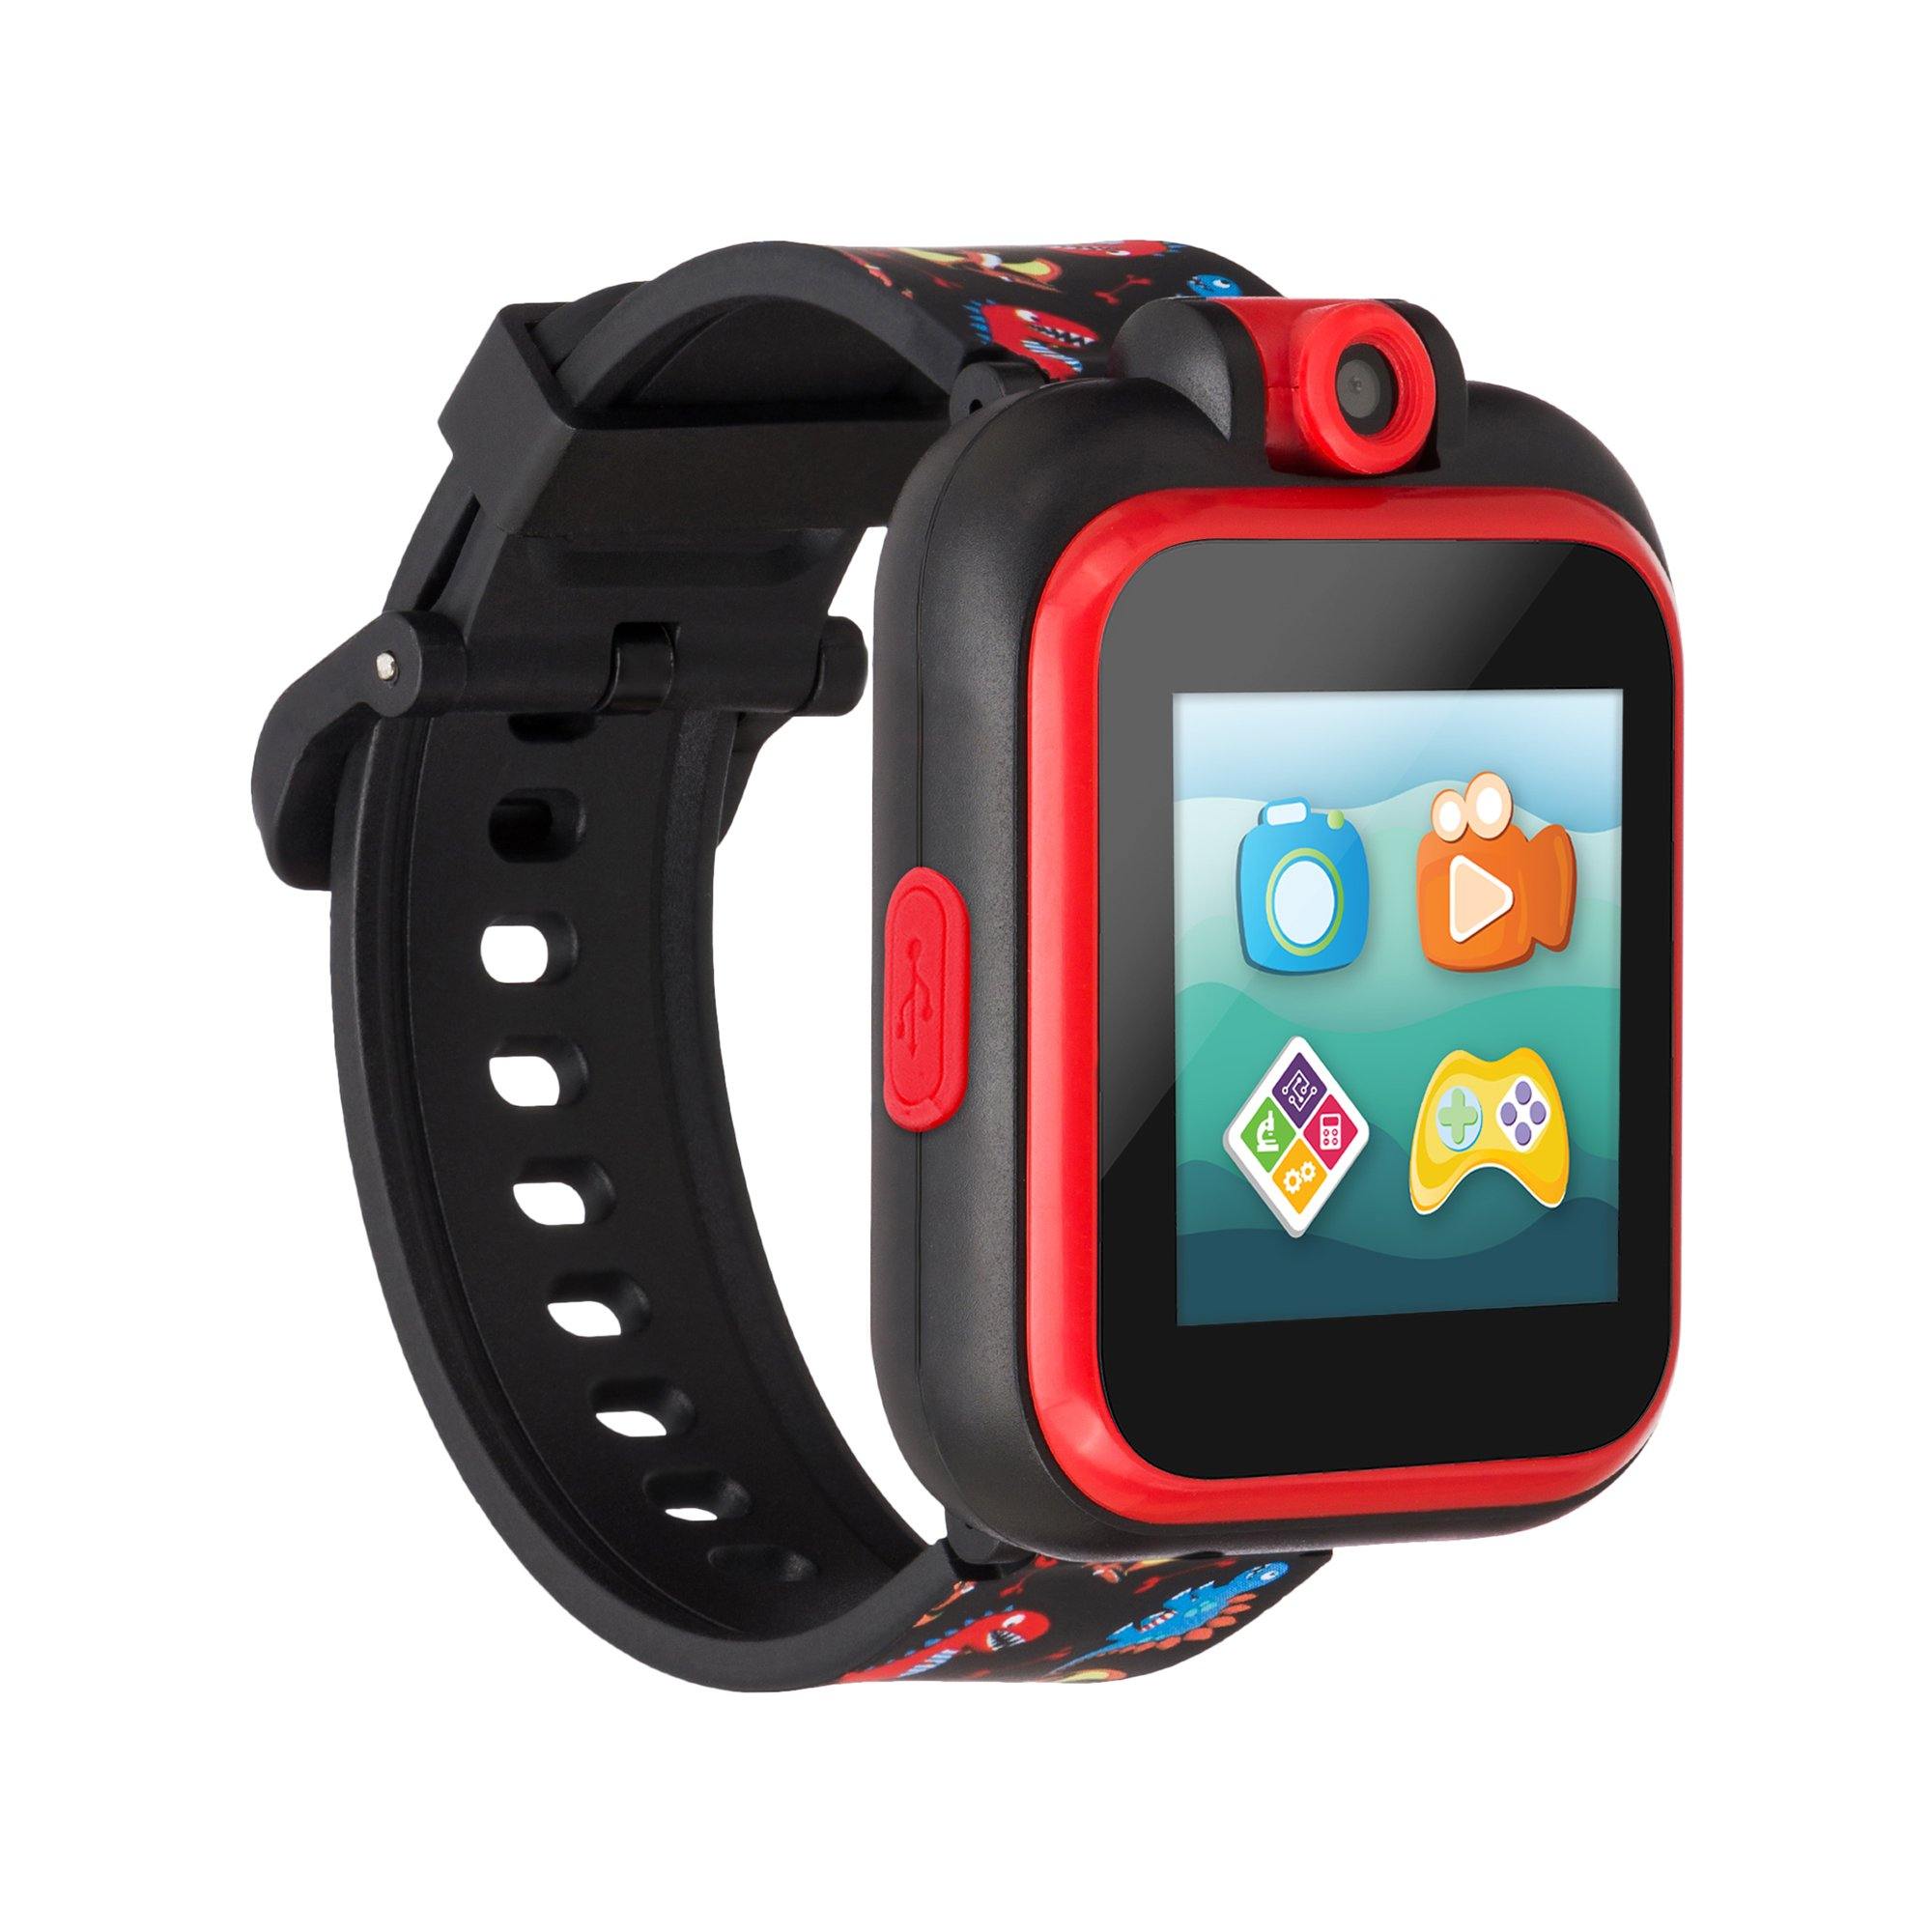 PlayZoom 2 Kids Smartwatch: Black Dinosaur Print affordable smart watch